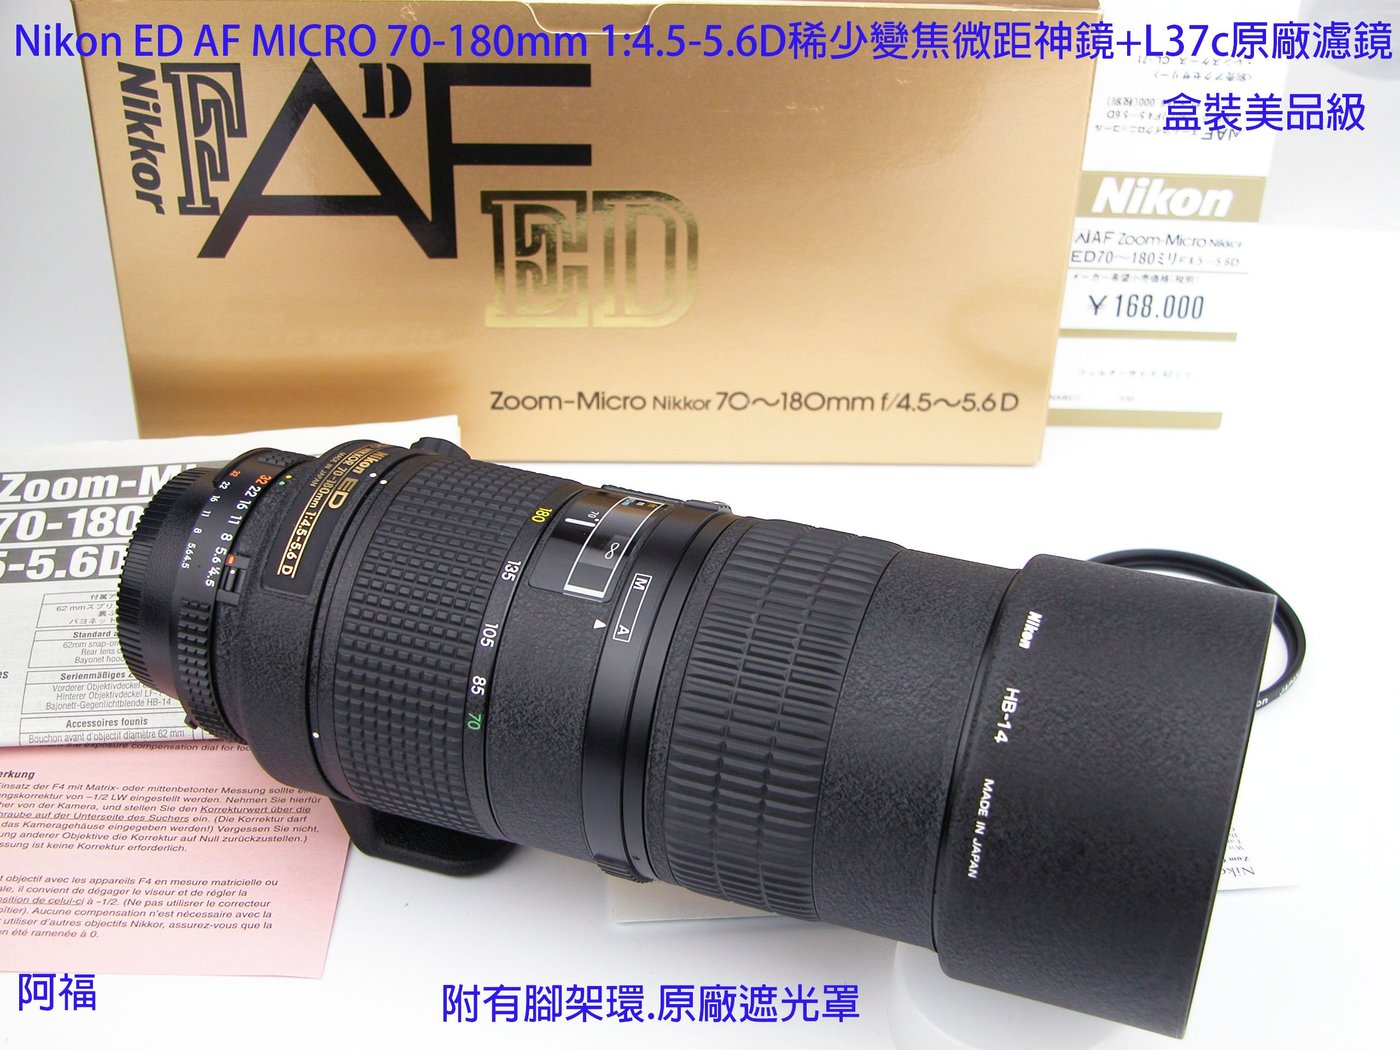 ╭☆ Nikon ED AF MICRO 70-180mm F4.5-5.6 D 稀少變焦微距神鏡盒裝美